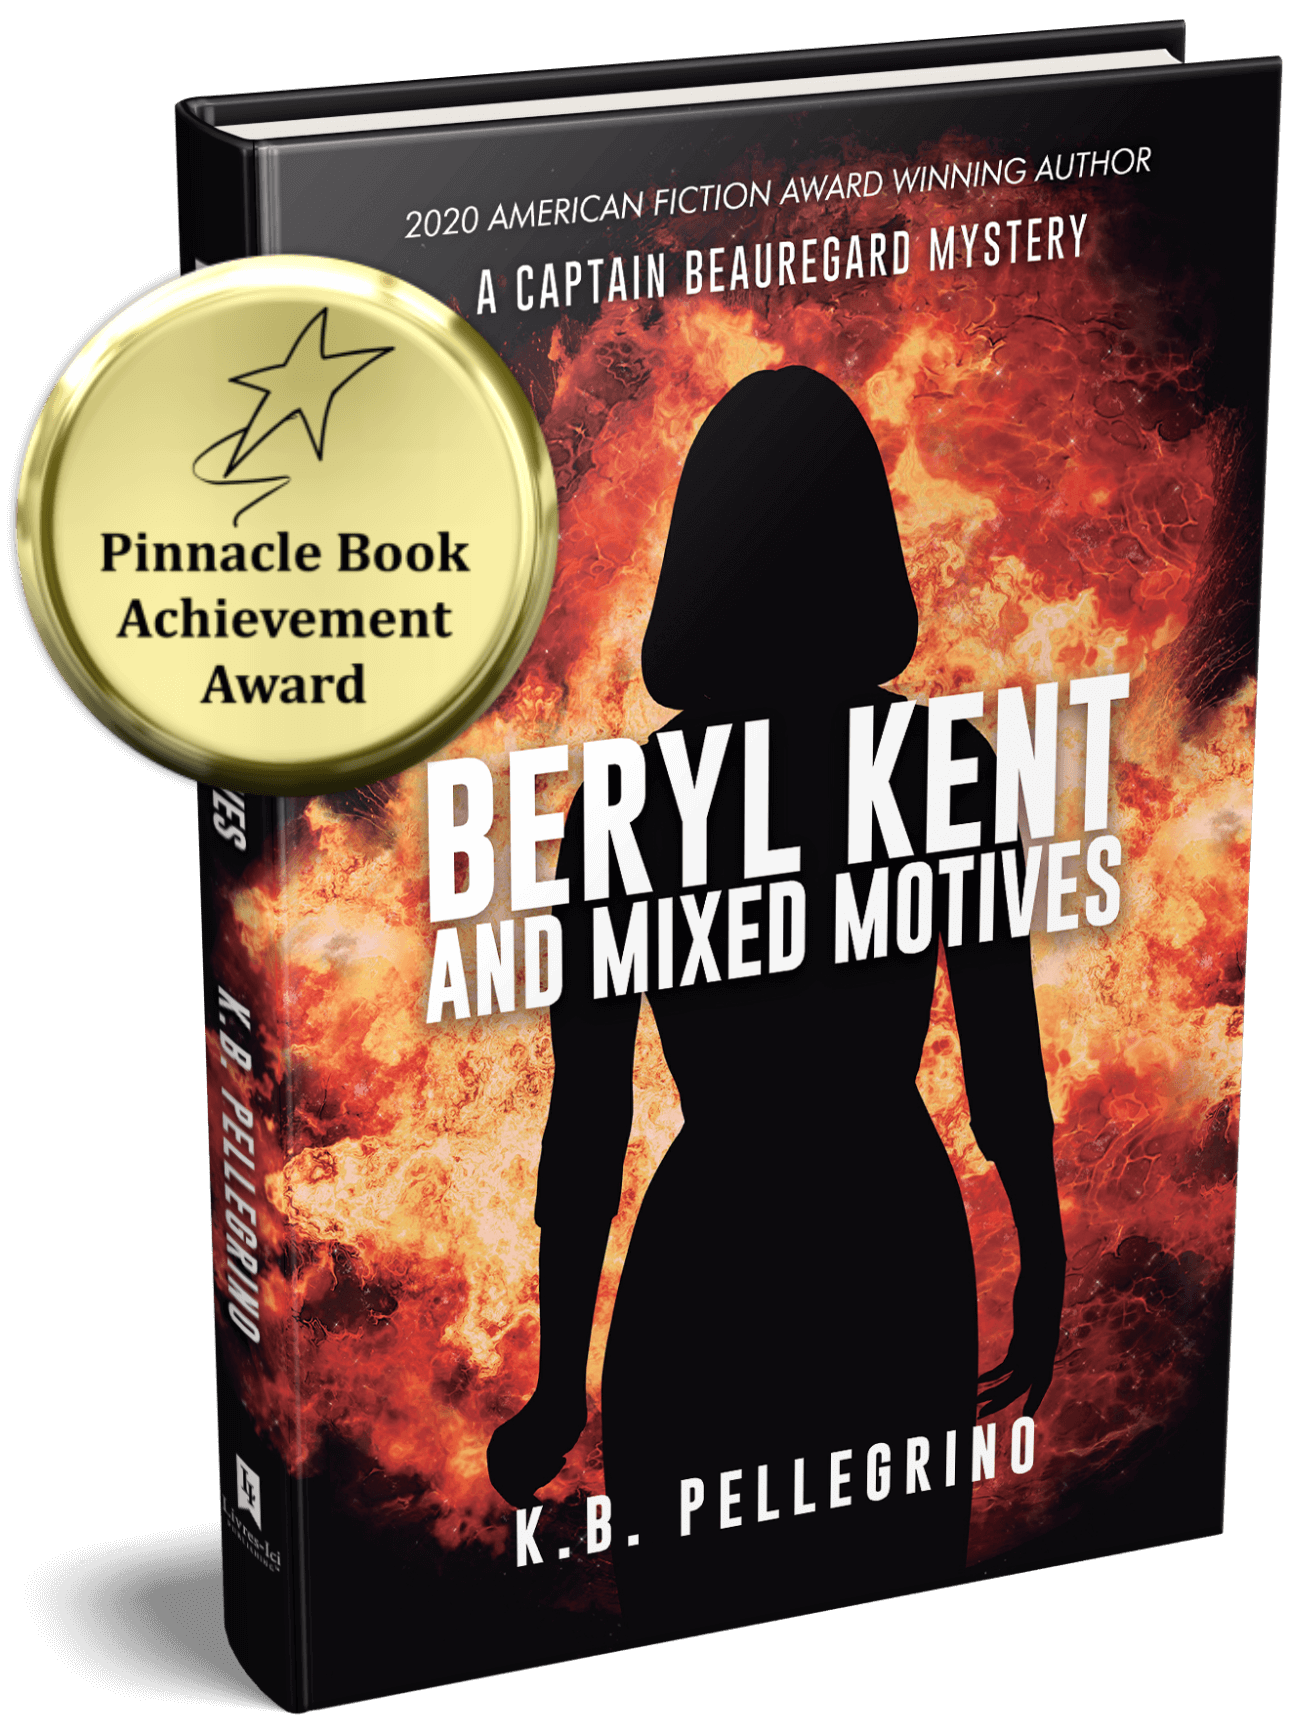 KB Pellegrino-Beryl Kent Mixed Motives with award